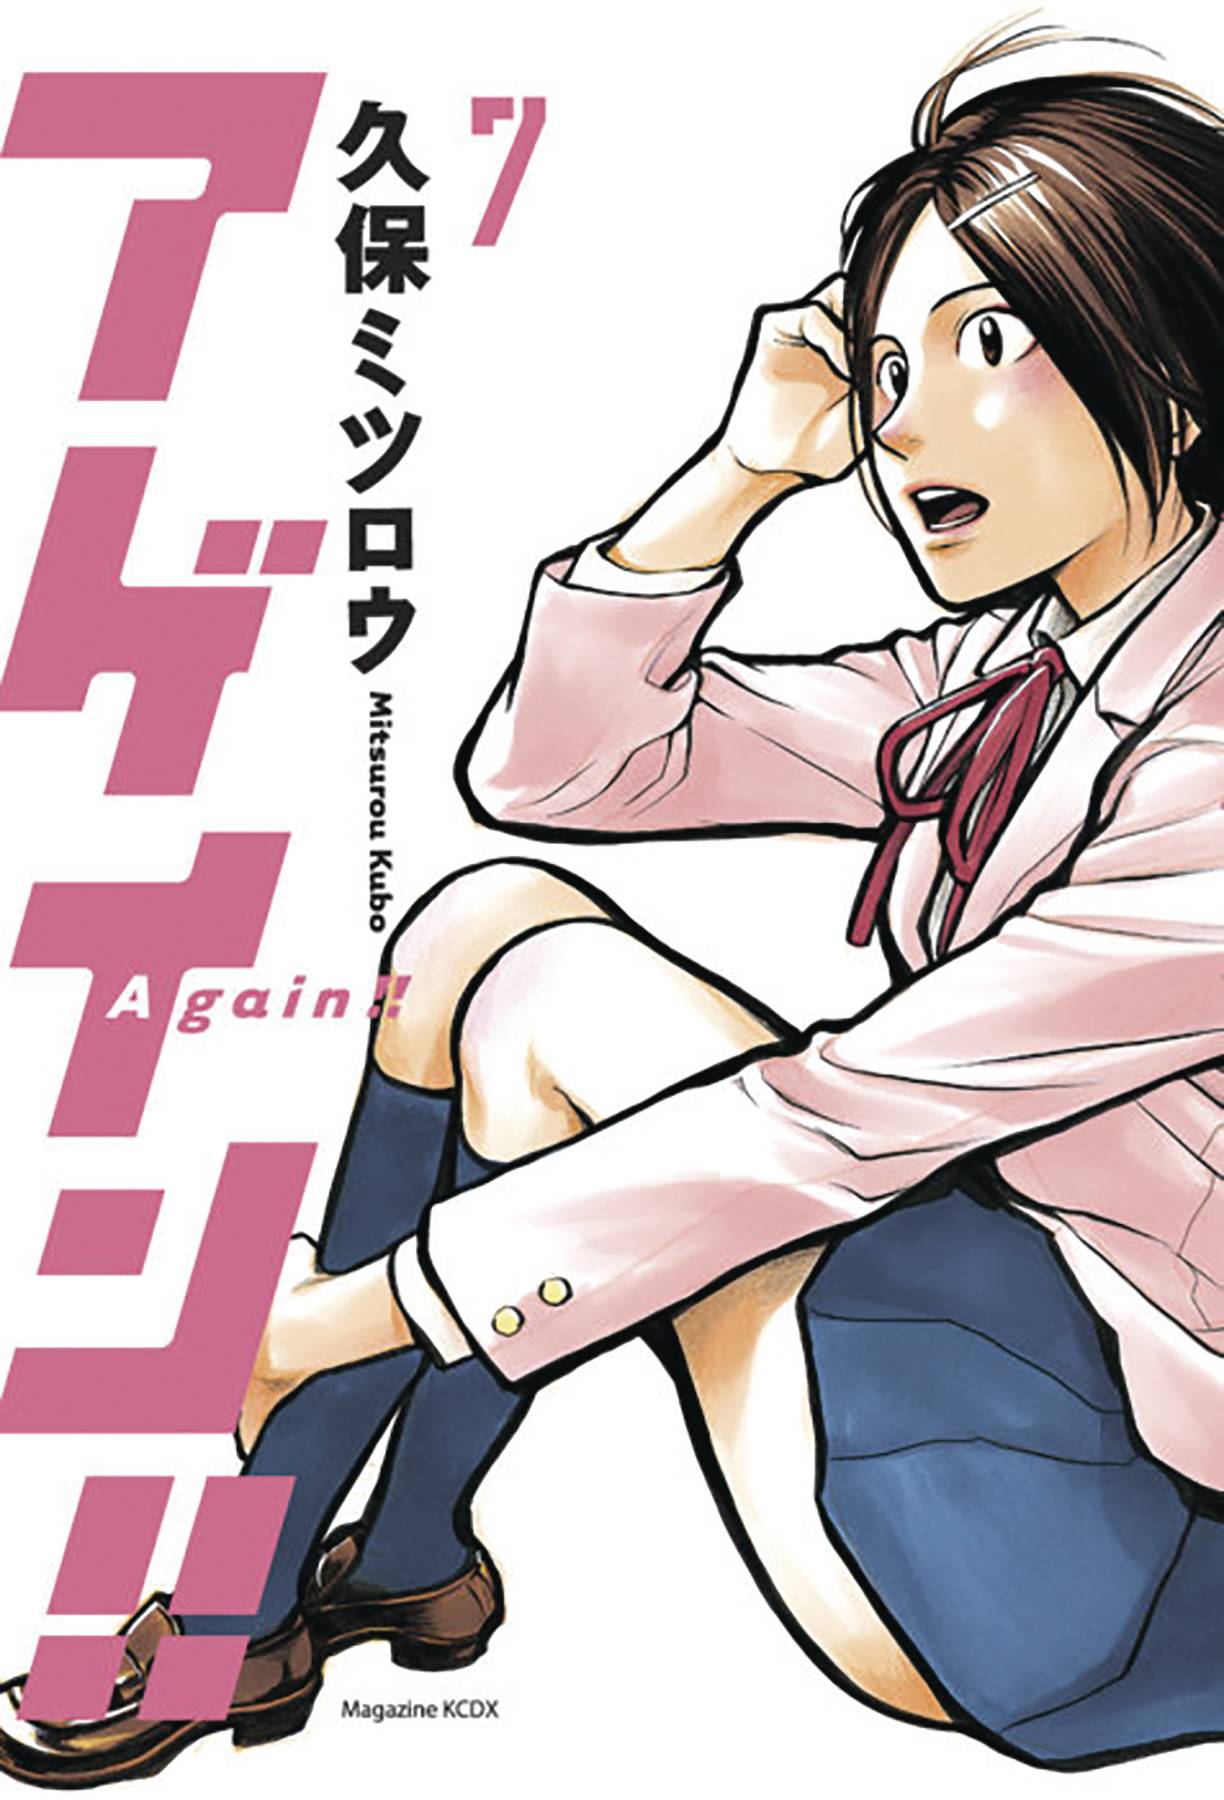 Again Manga Volume 7 (Mature)